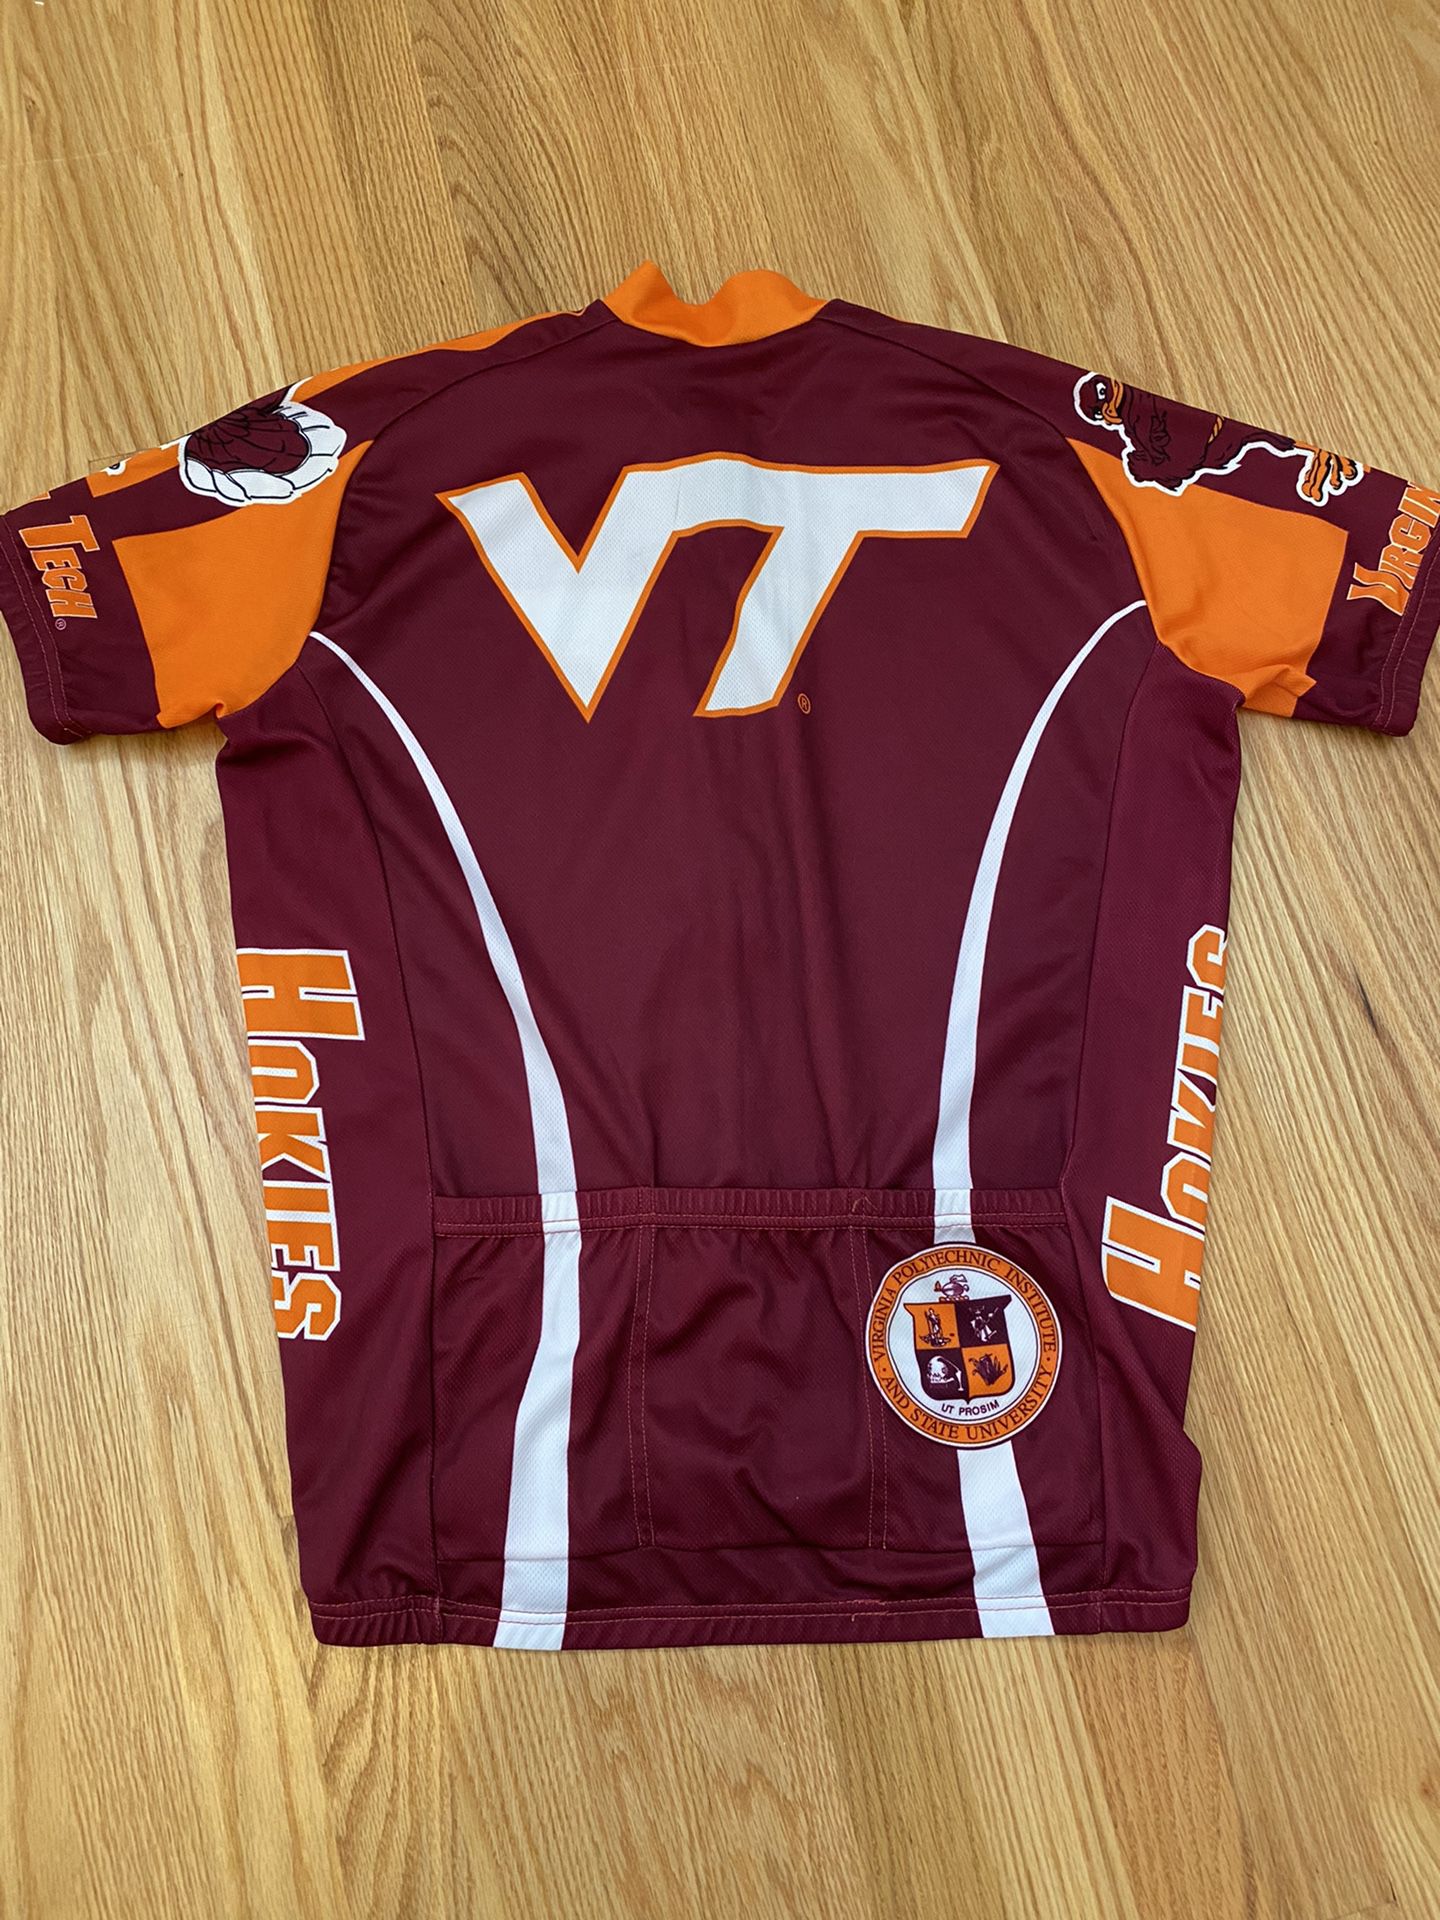 Virginia Tech Cycling Jersey-Mens L